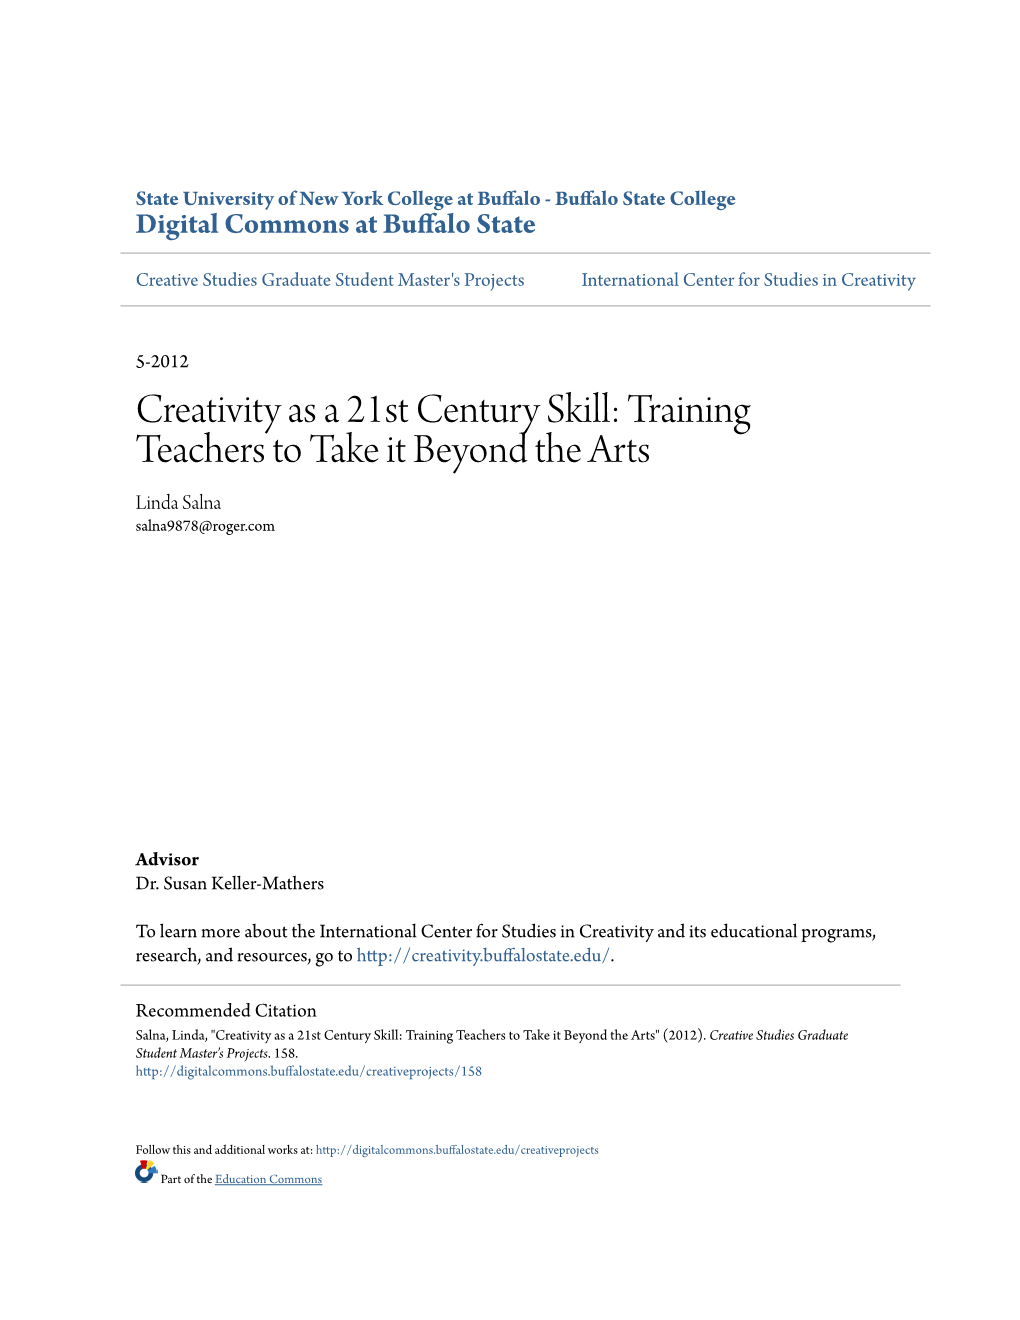 Creativity As a 21St Century Skill: Training Teachers to Take It Beyond the Arts Linda Salna Salna9878@Roger.Com